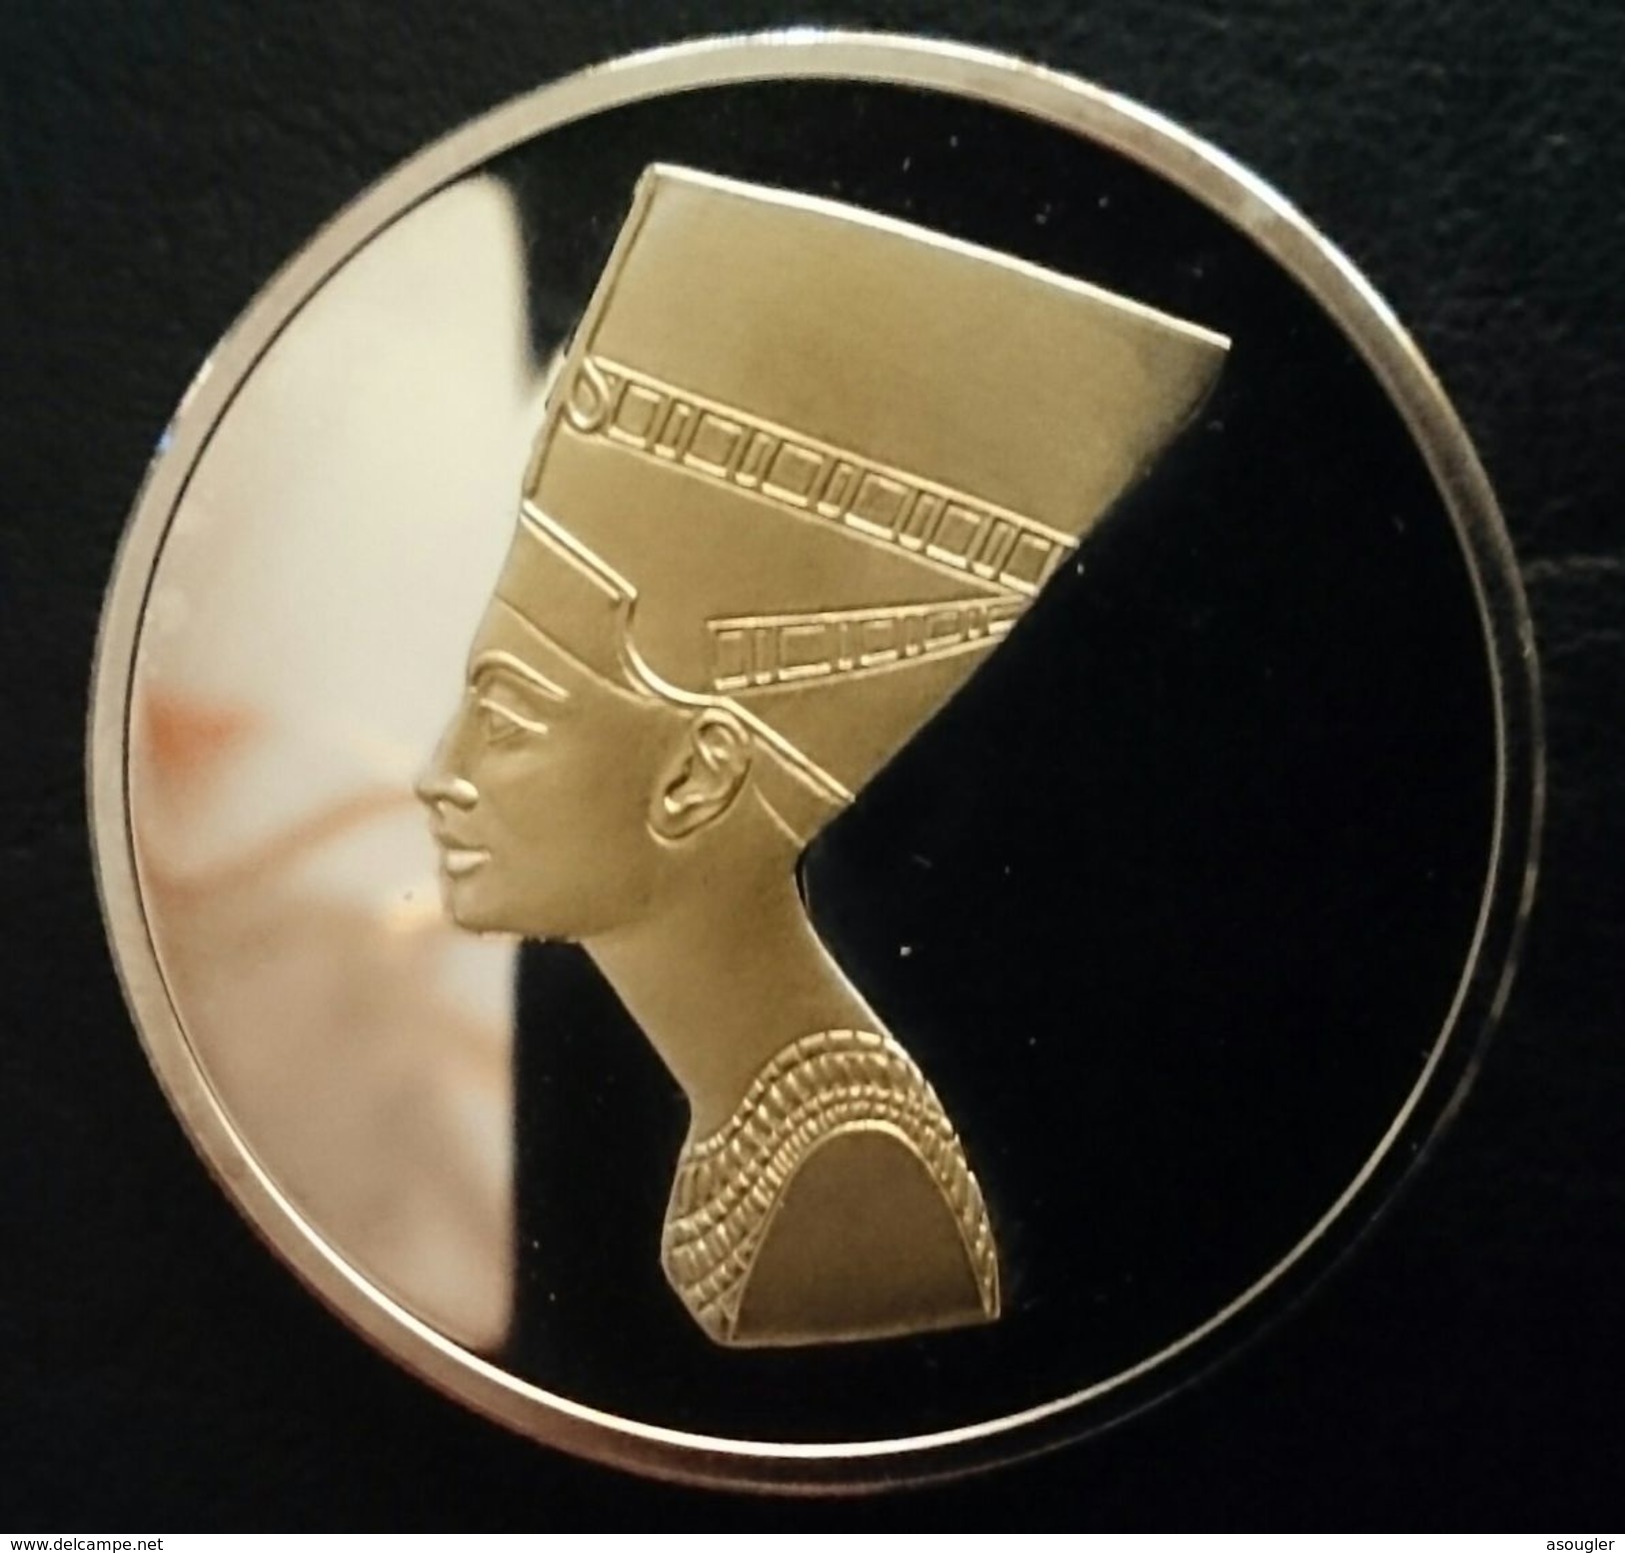 CAMBODIA 3000 Riels 2006 Silver & Gold PROOF "Queen Nefertiti" Free Shipping Via Registered Air Mail - Cambodja